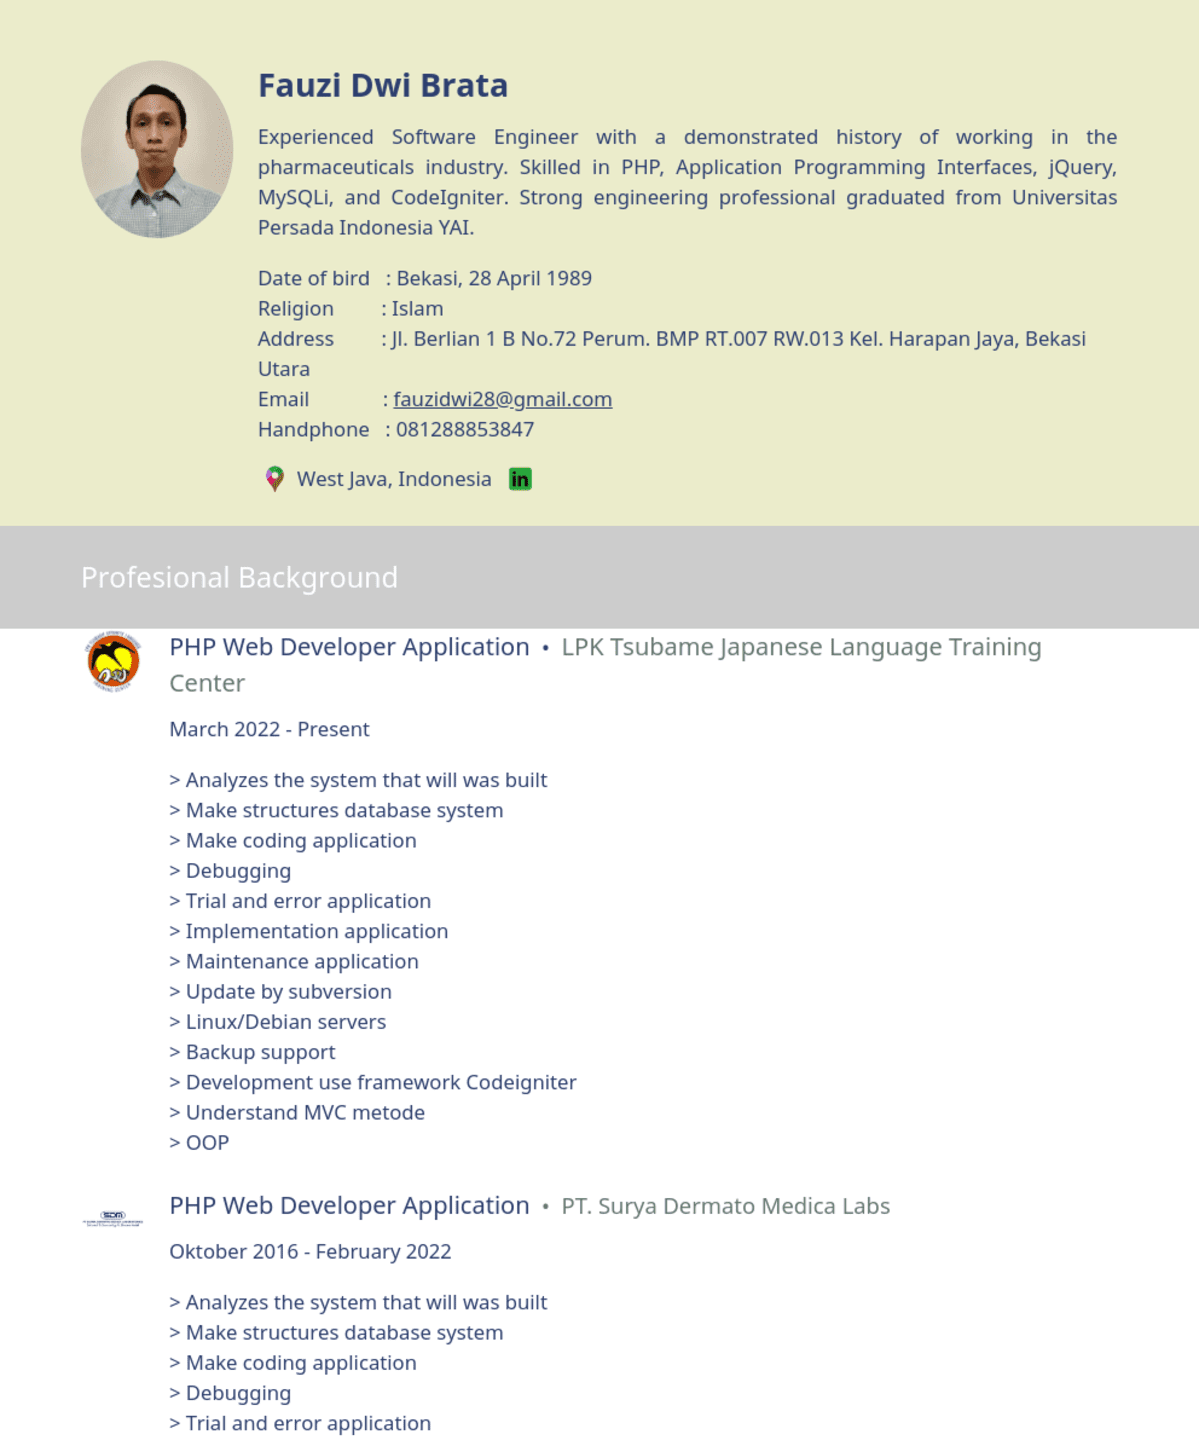 Fauzi Dwi Brata, PHP Web Developer Application@PT. SURYA DERMATO MEDICA LABS